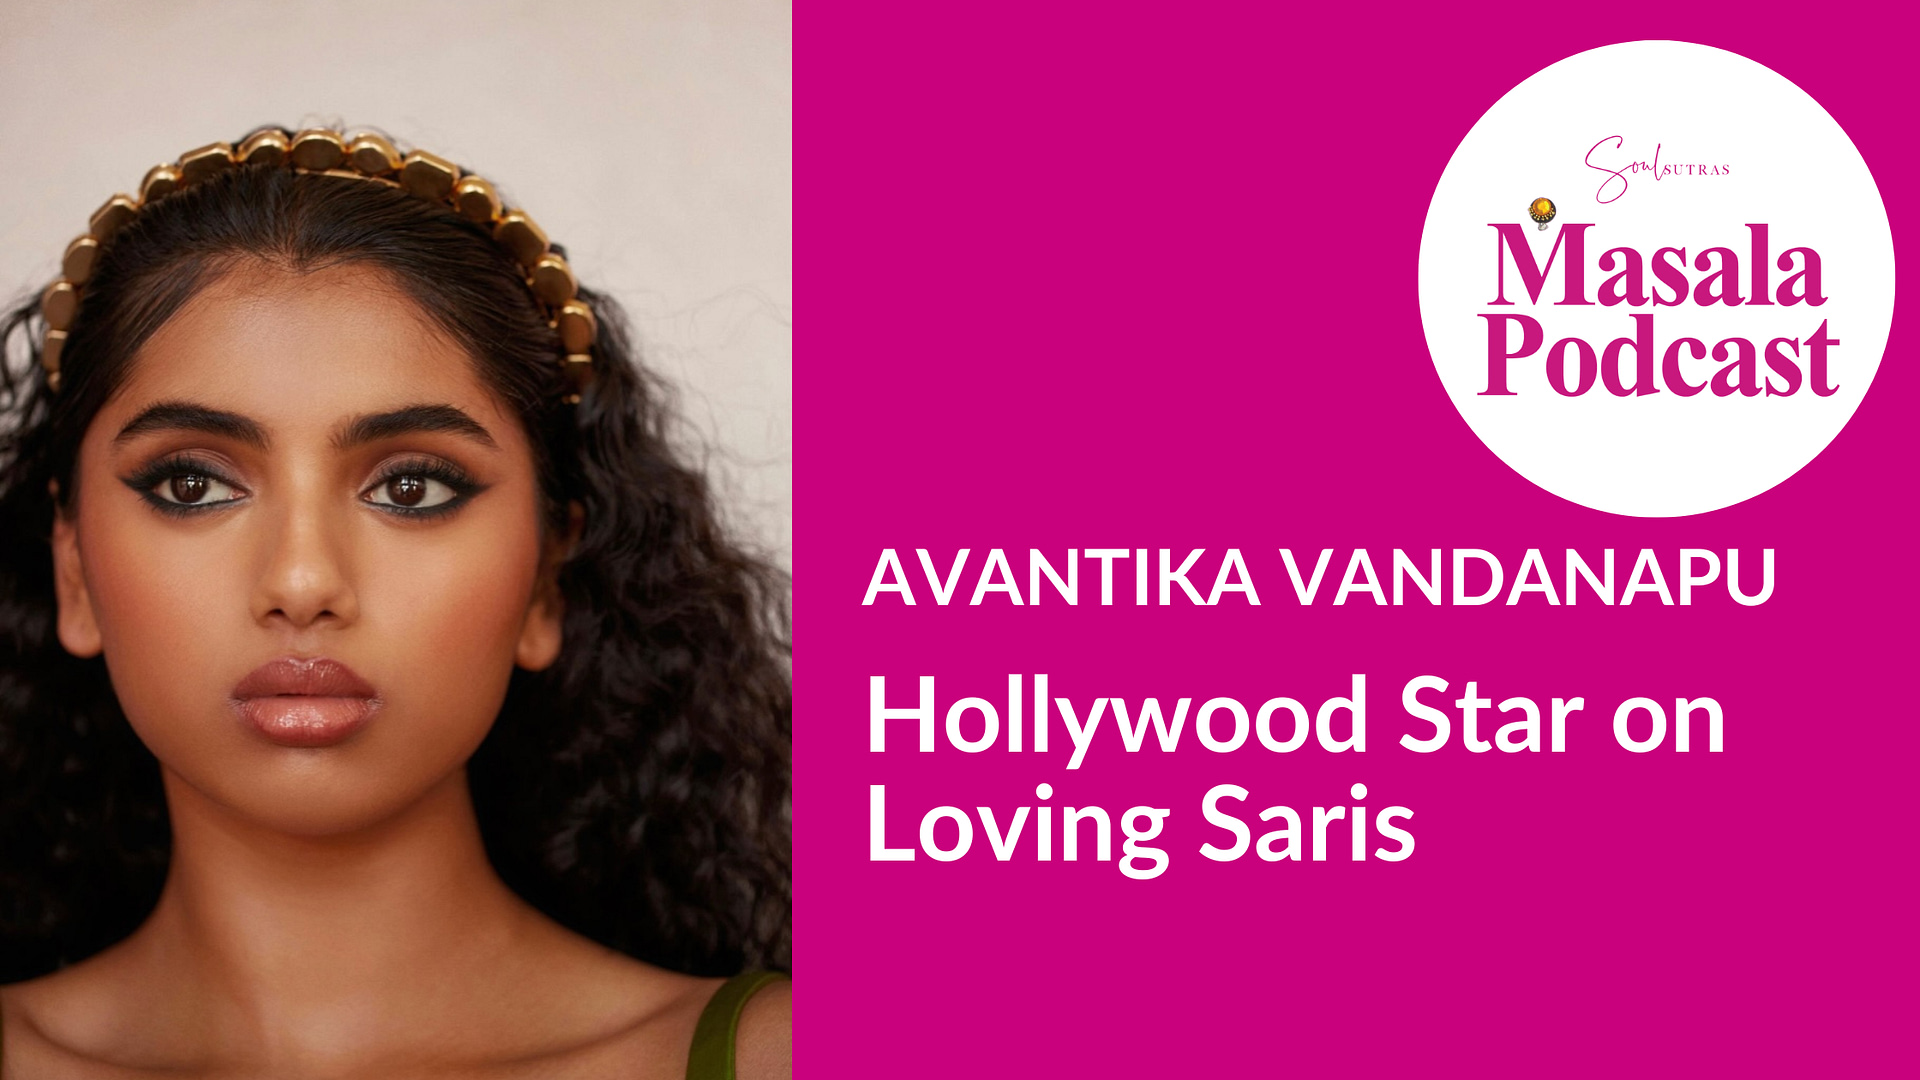 Avantika Vandanapu, Hollywood star, on Masala Podcast, the top South Asian feminist podcast